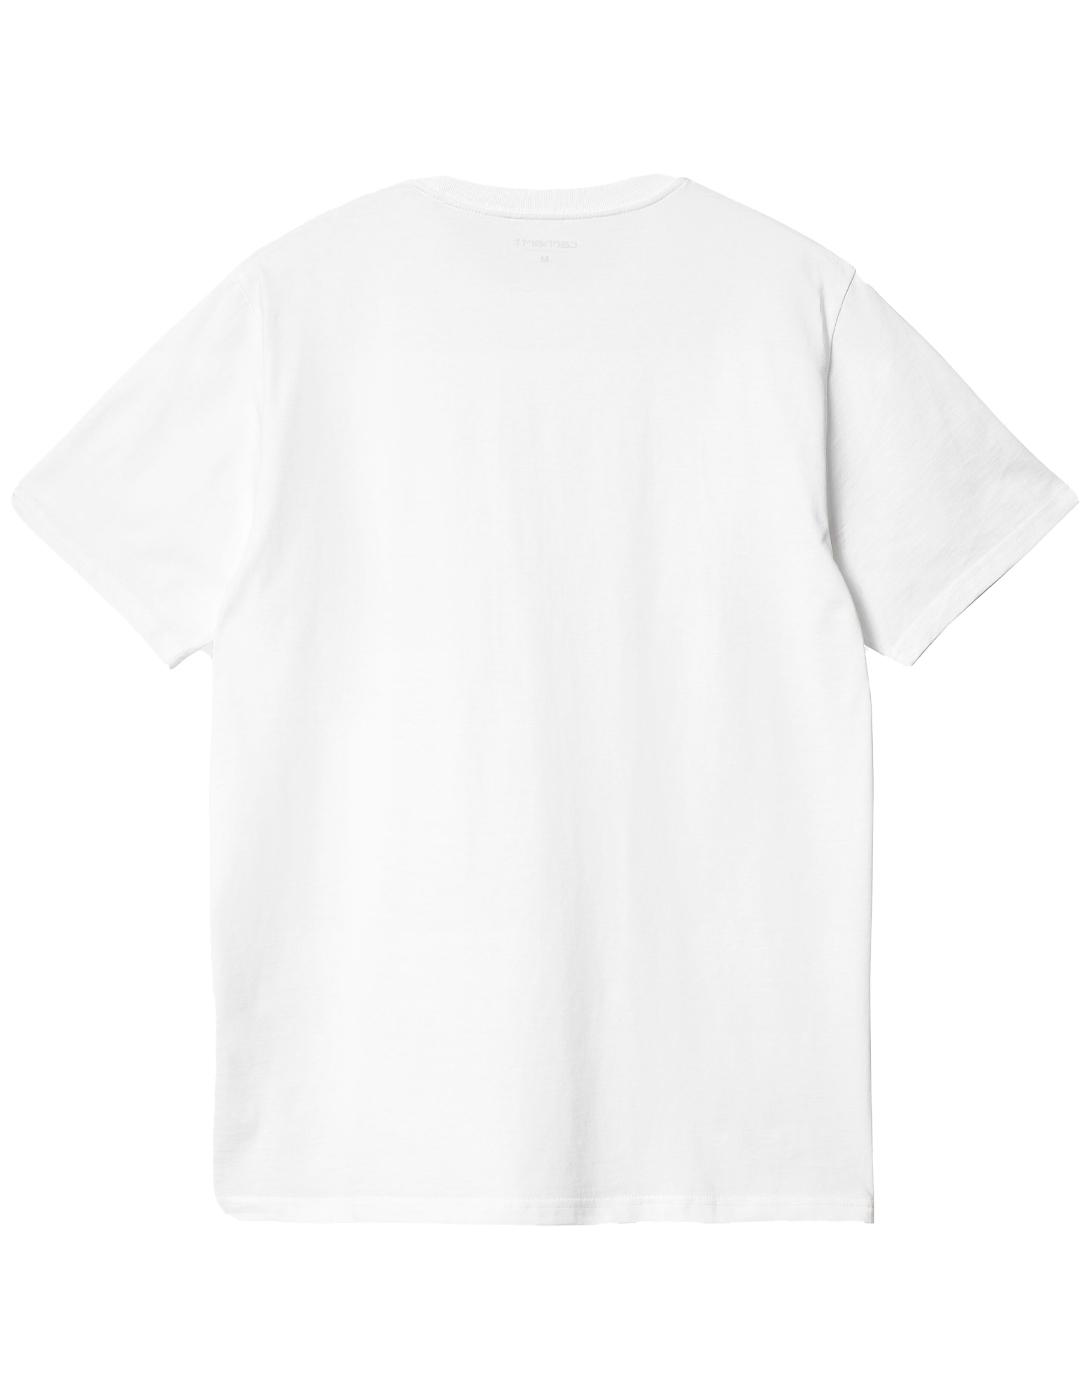 Camiseta Carhartt Wip Pocket Blanco